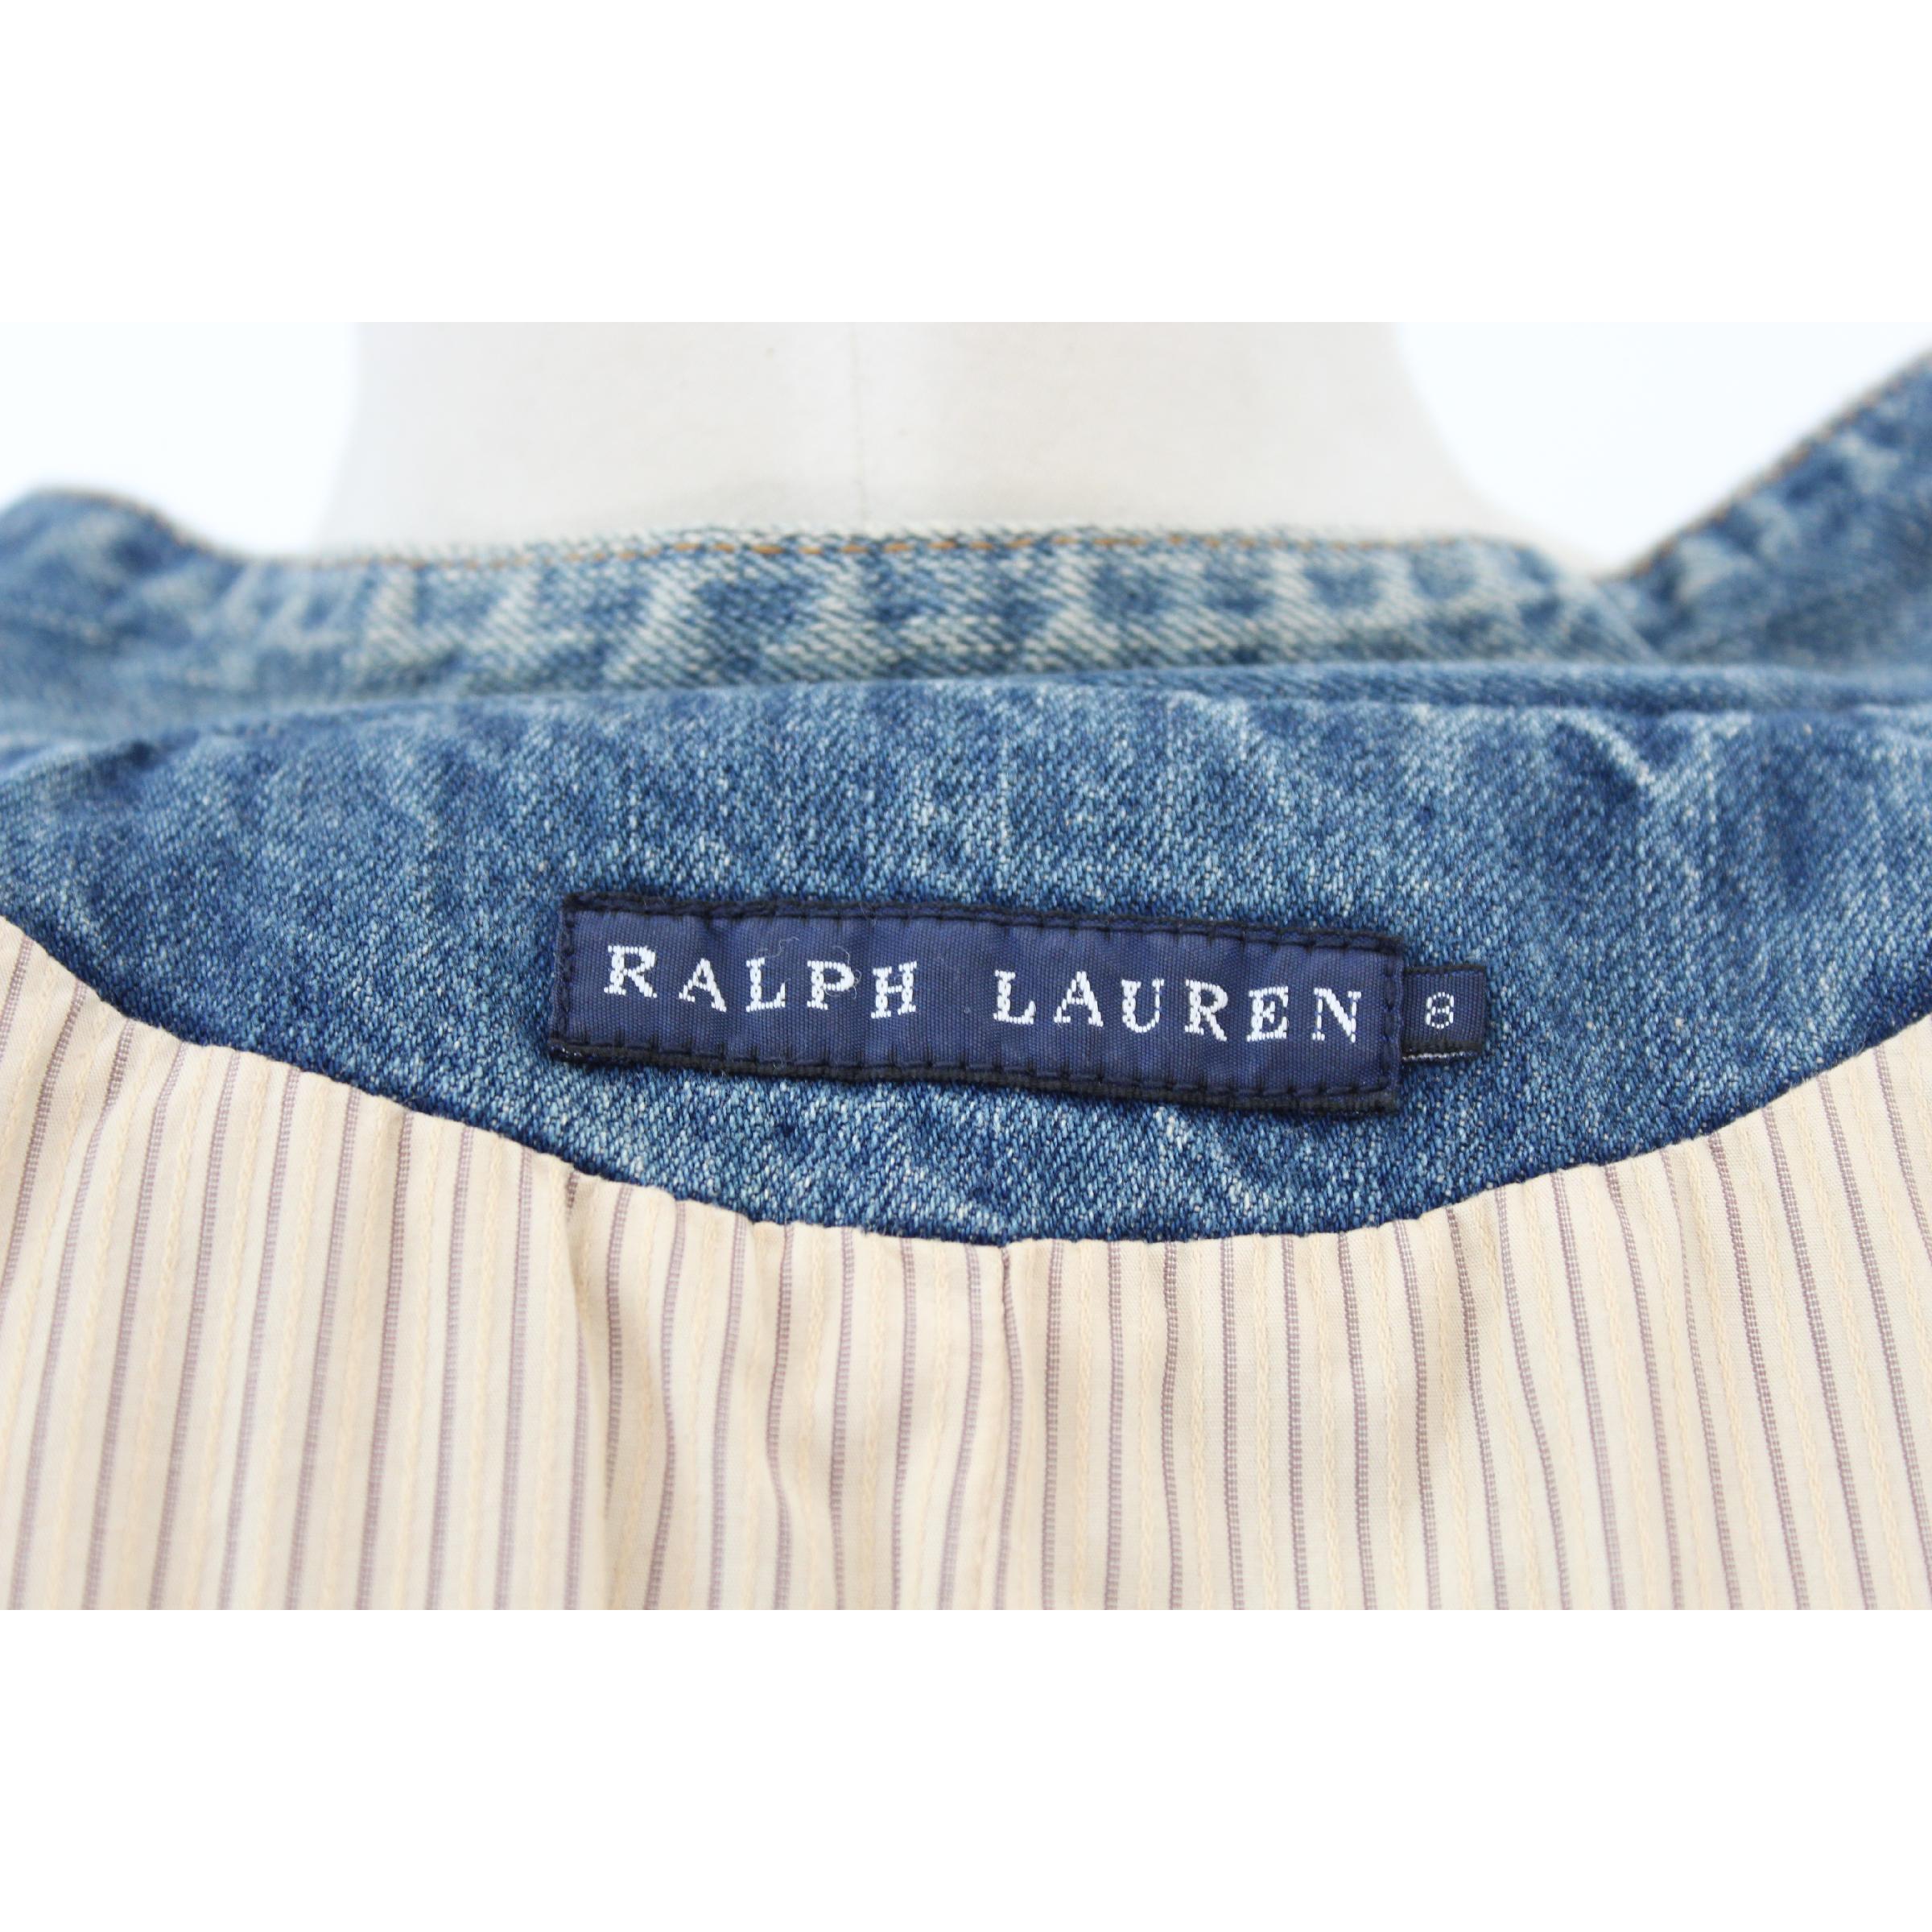 Ralph Lauren Blue Jeans Flared Denim Jacket Stand-Up Collar Golden Insert 1990s 5